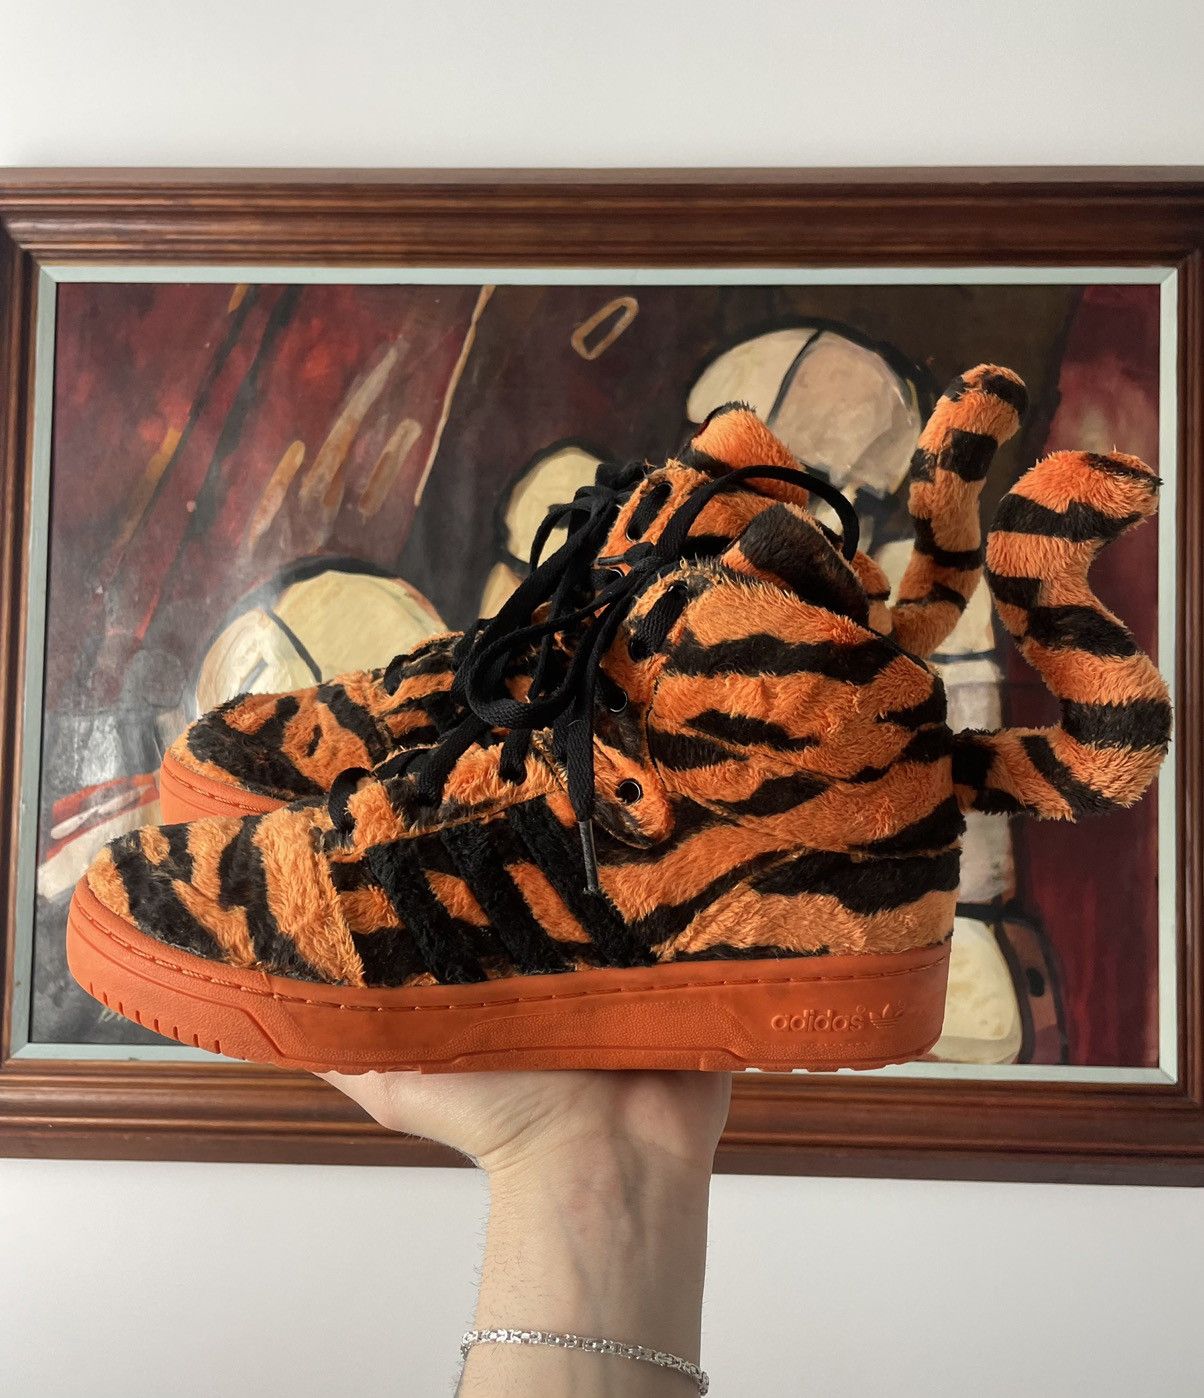 Adidas 🦁 Adidas Jeremy Scott Tiger Orange Cheetos High Sneakers Fur Size US 7.5 / EU 40-41 - 1 Preview